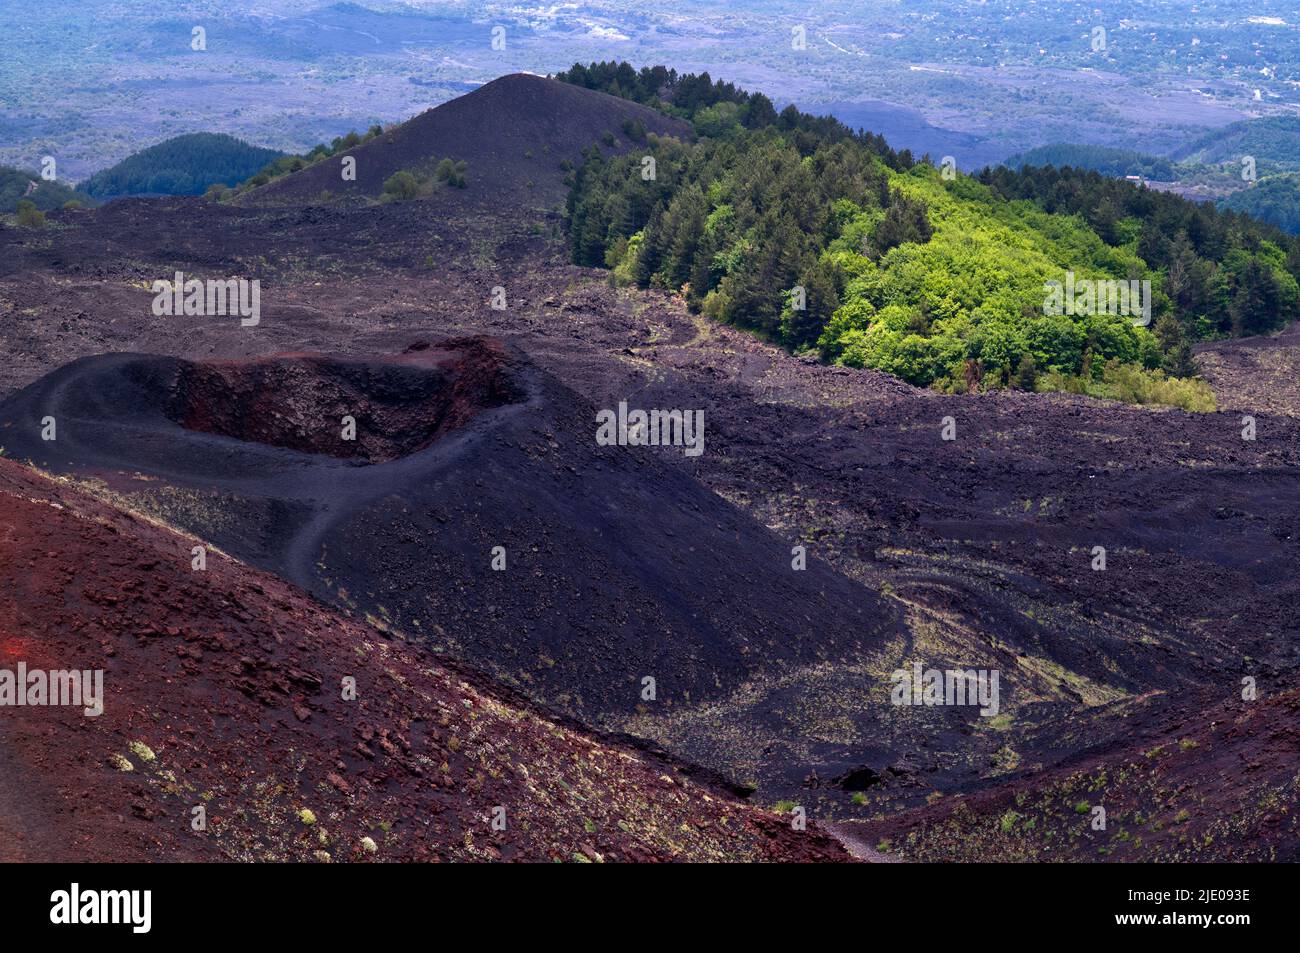 View of red lava rocks, volcanic soil, Crateri crater Silvestri, Etna volcano, Sicily, Italy Stock Photo